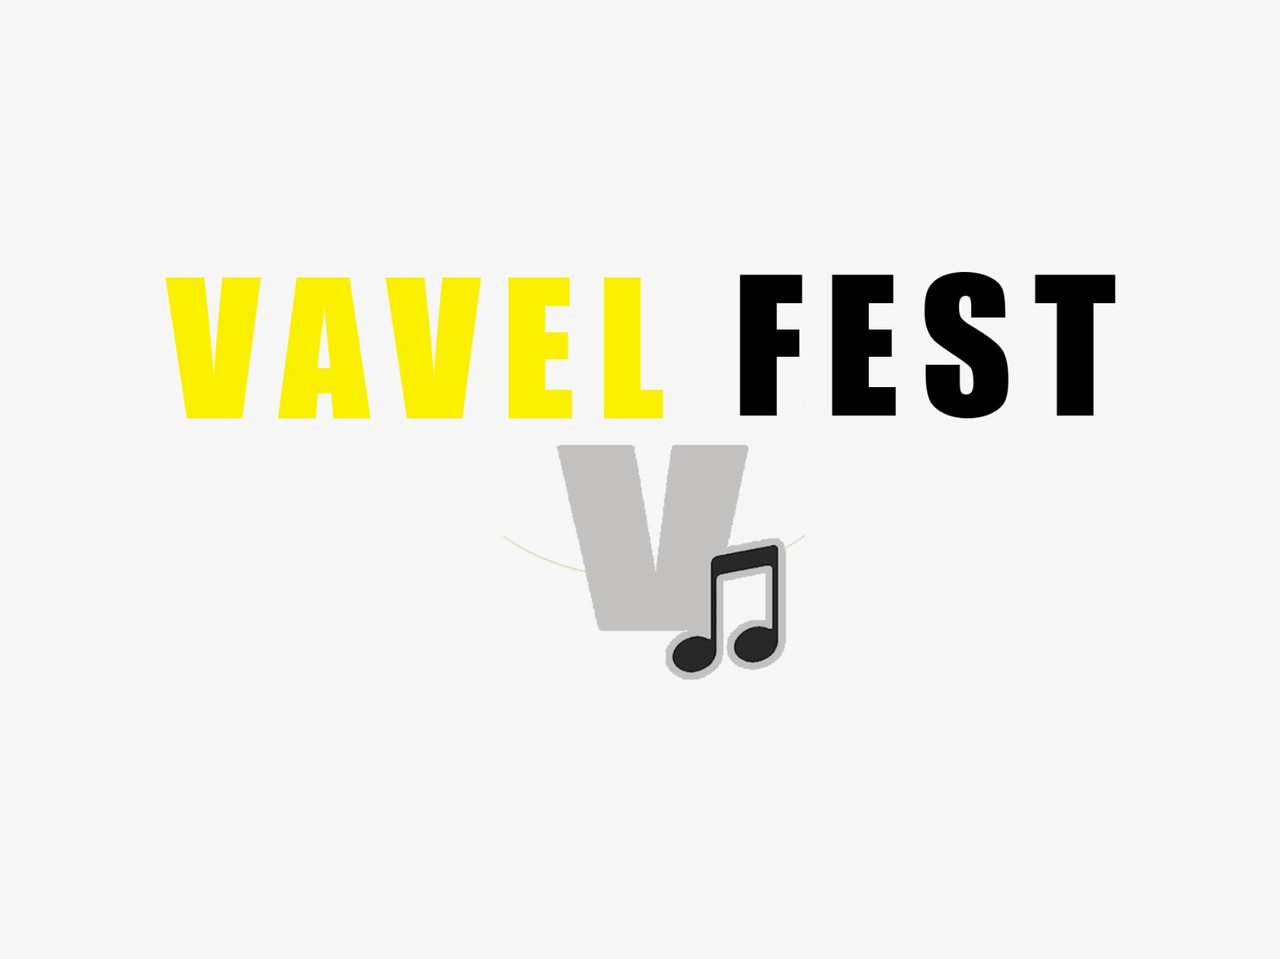 VAVELFEST: El festival online de Música Vavel